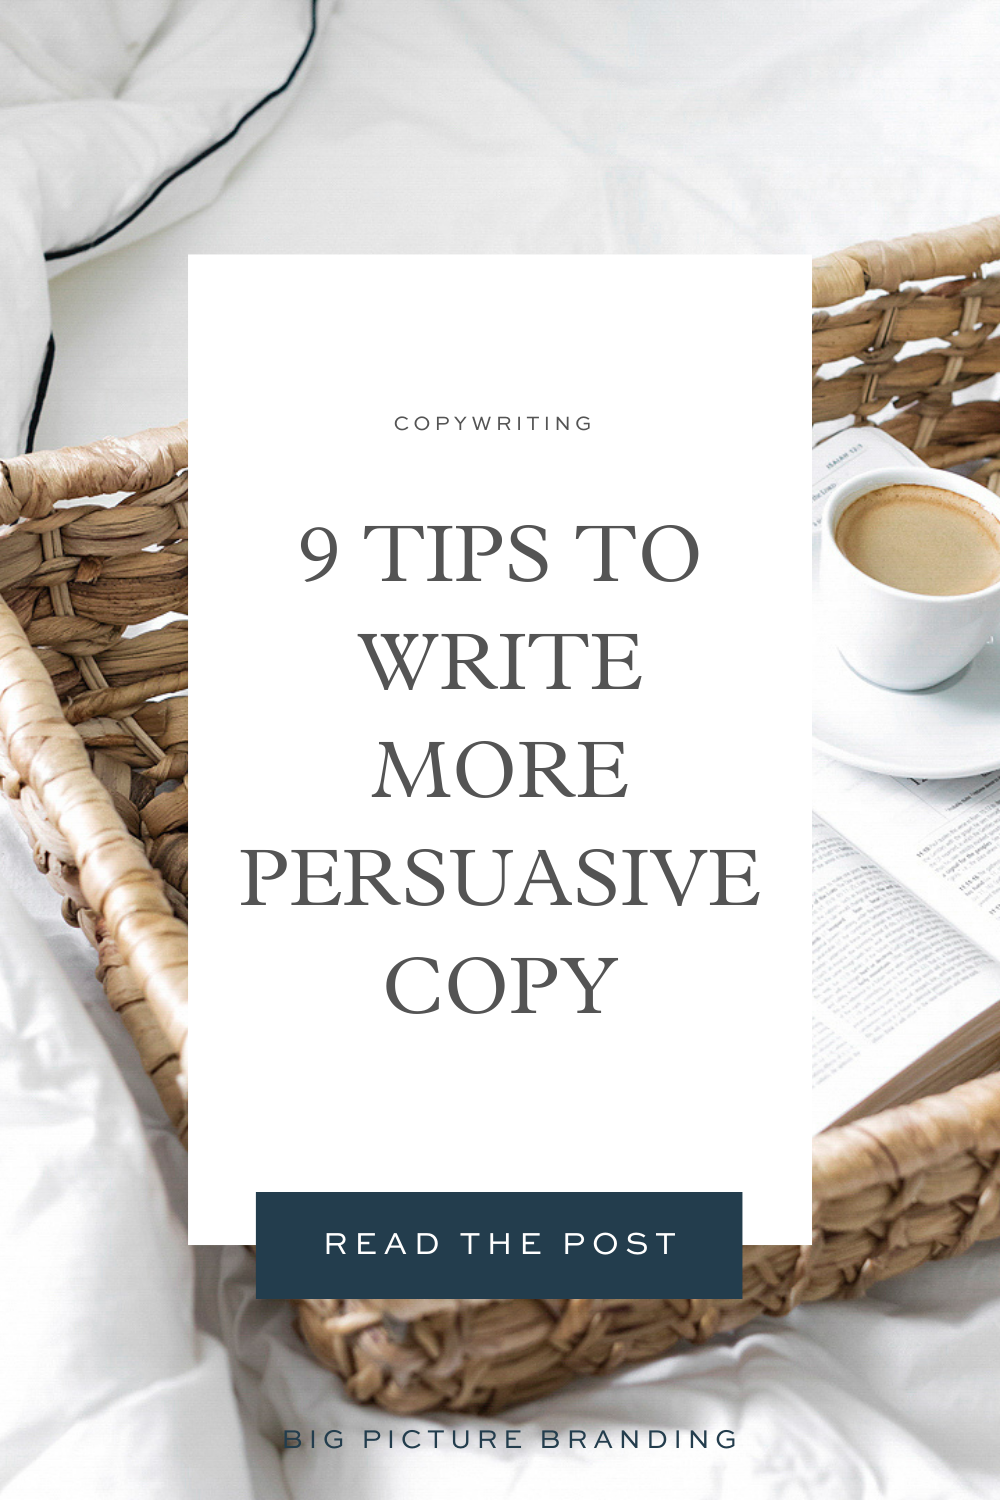 Persuasion copywriting tutorial tips